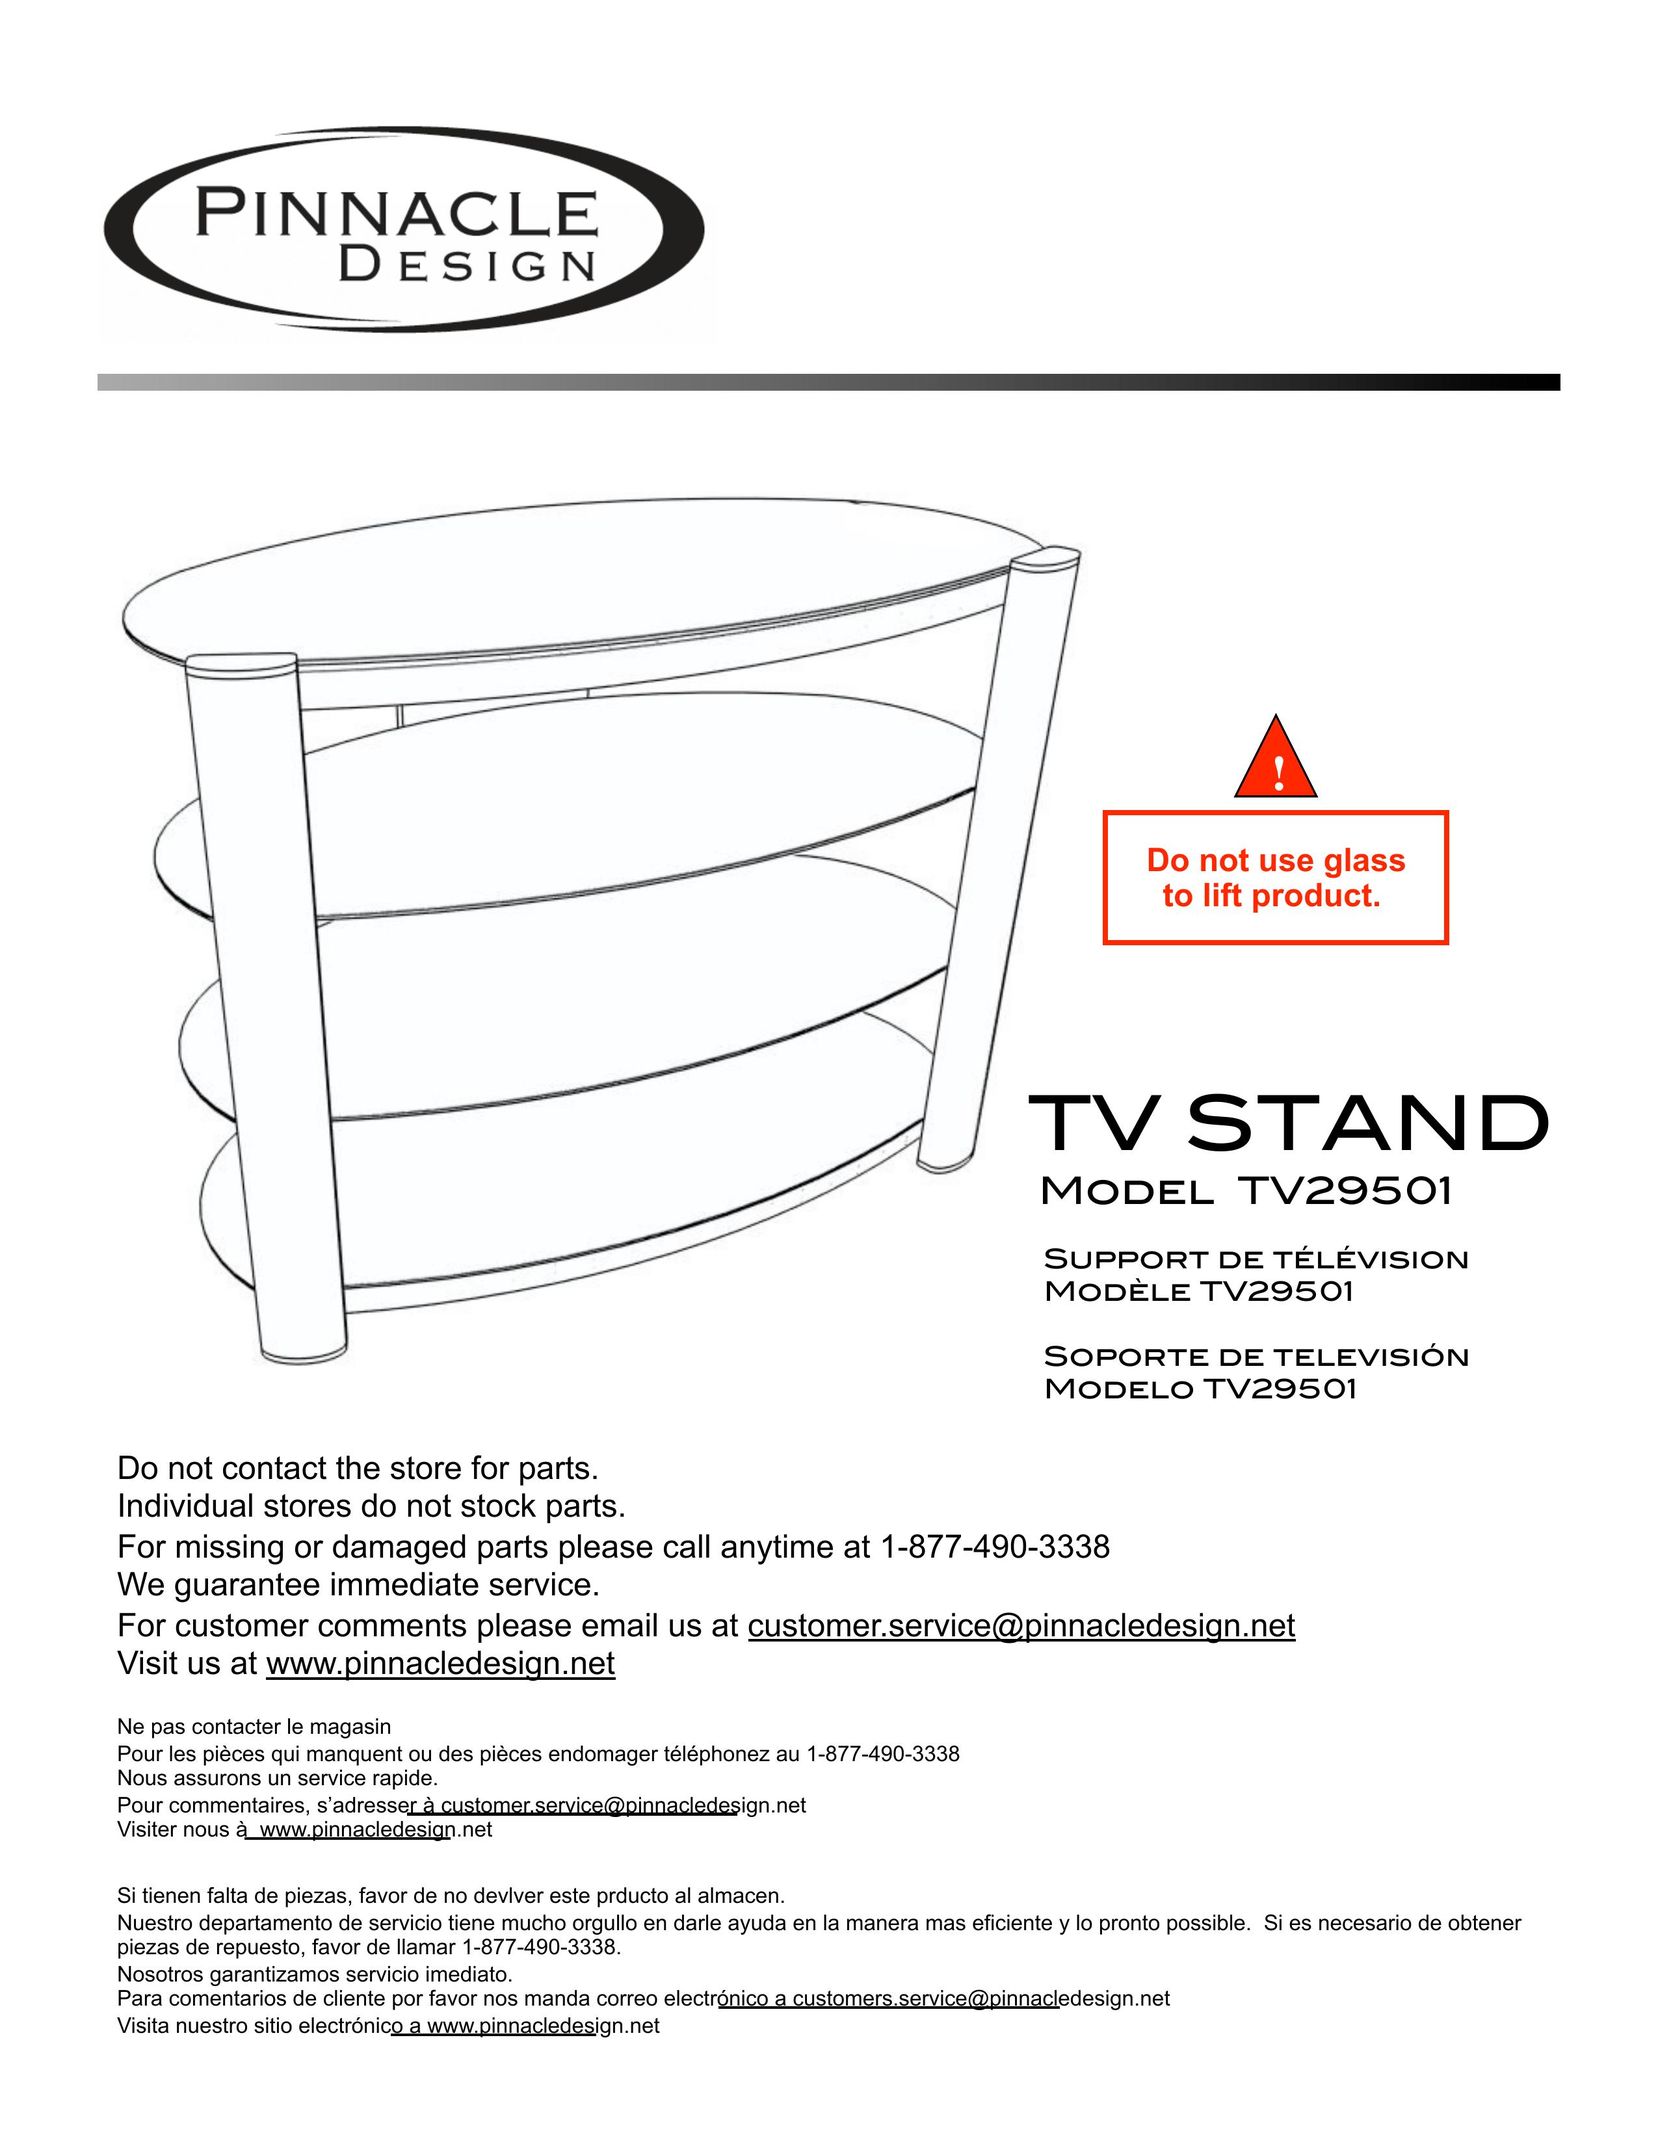 Pinnacle Design TV29501 TV Video Accessories User Manual